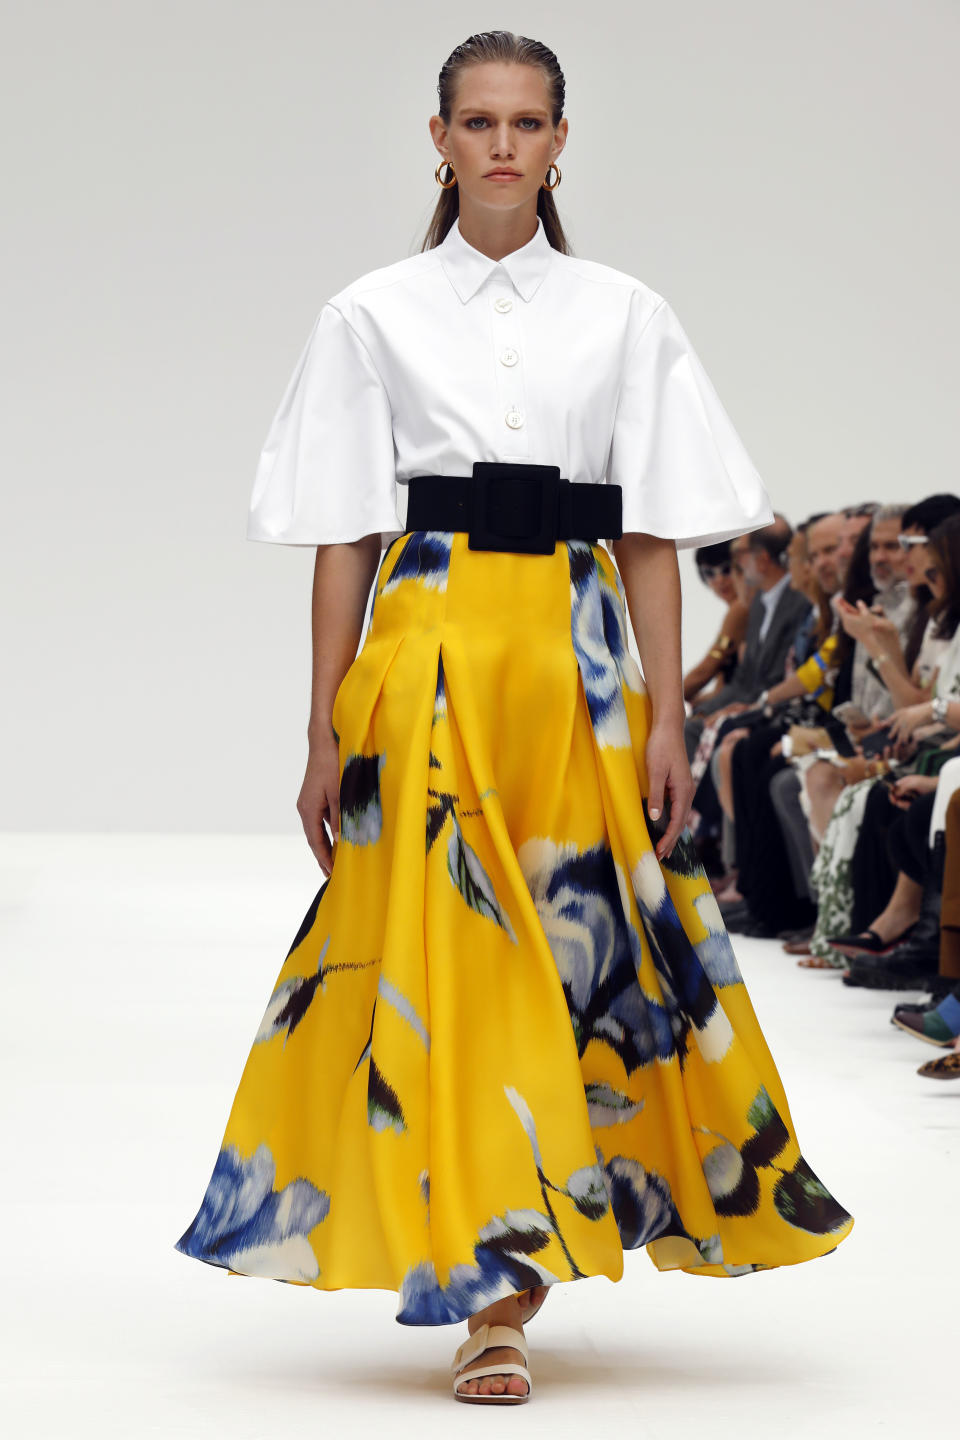 The Carolina Herrera collection is modeled during Fashion Week, in New York, Monday, Sept. 9, 2019. (AP Photo/Richard Drew)